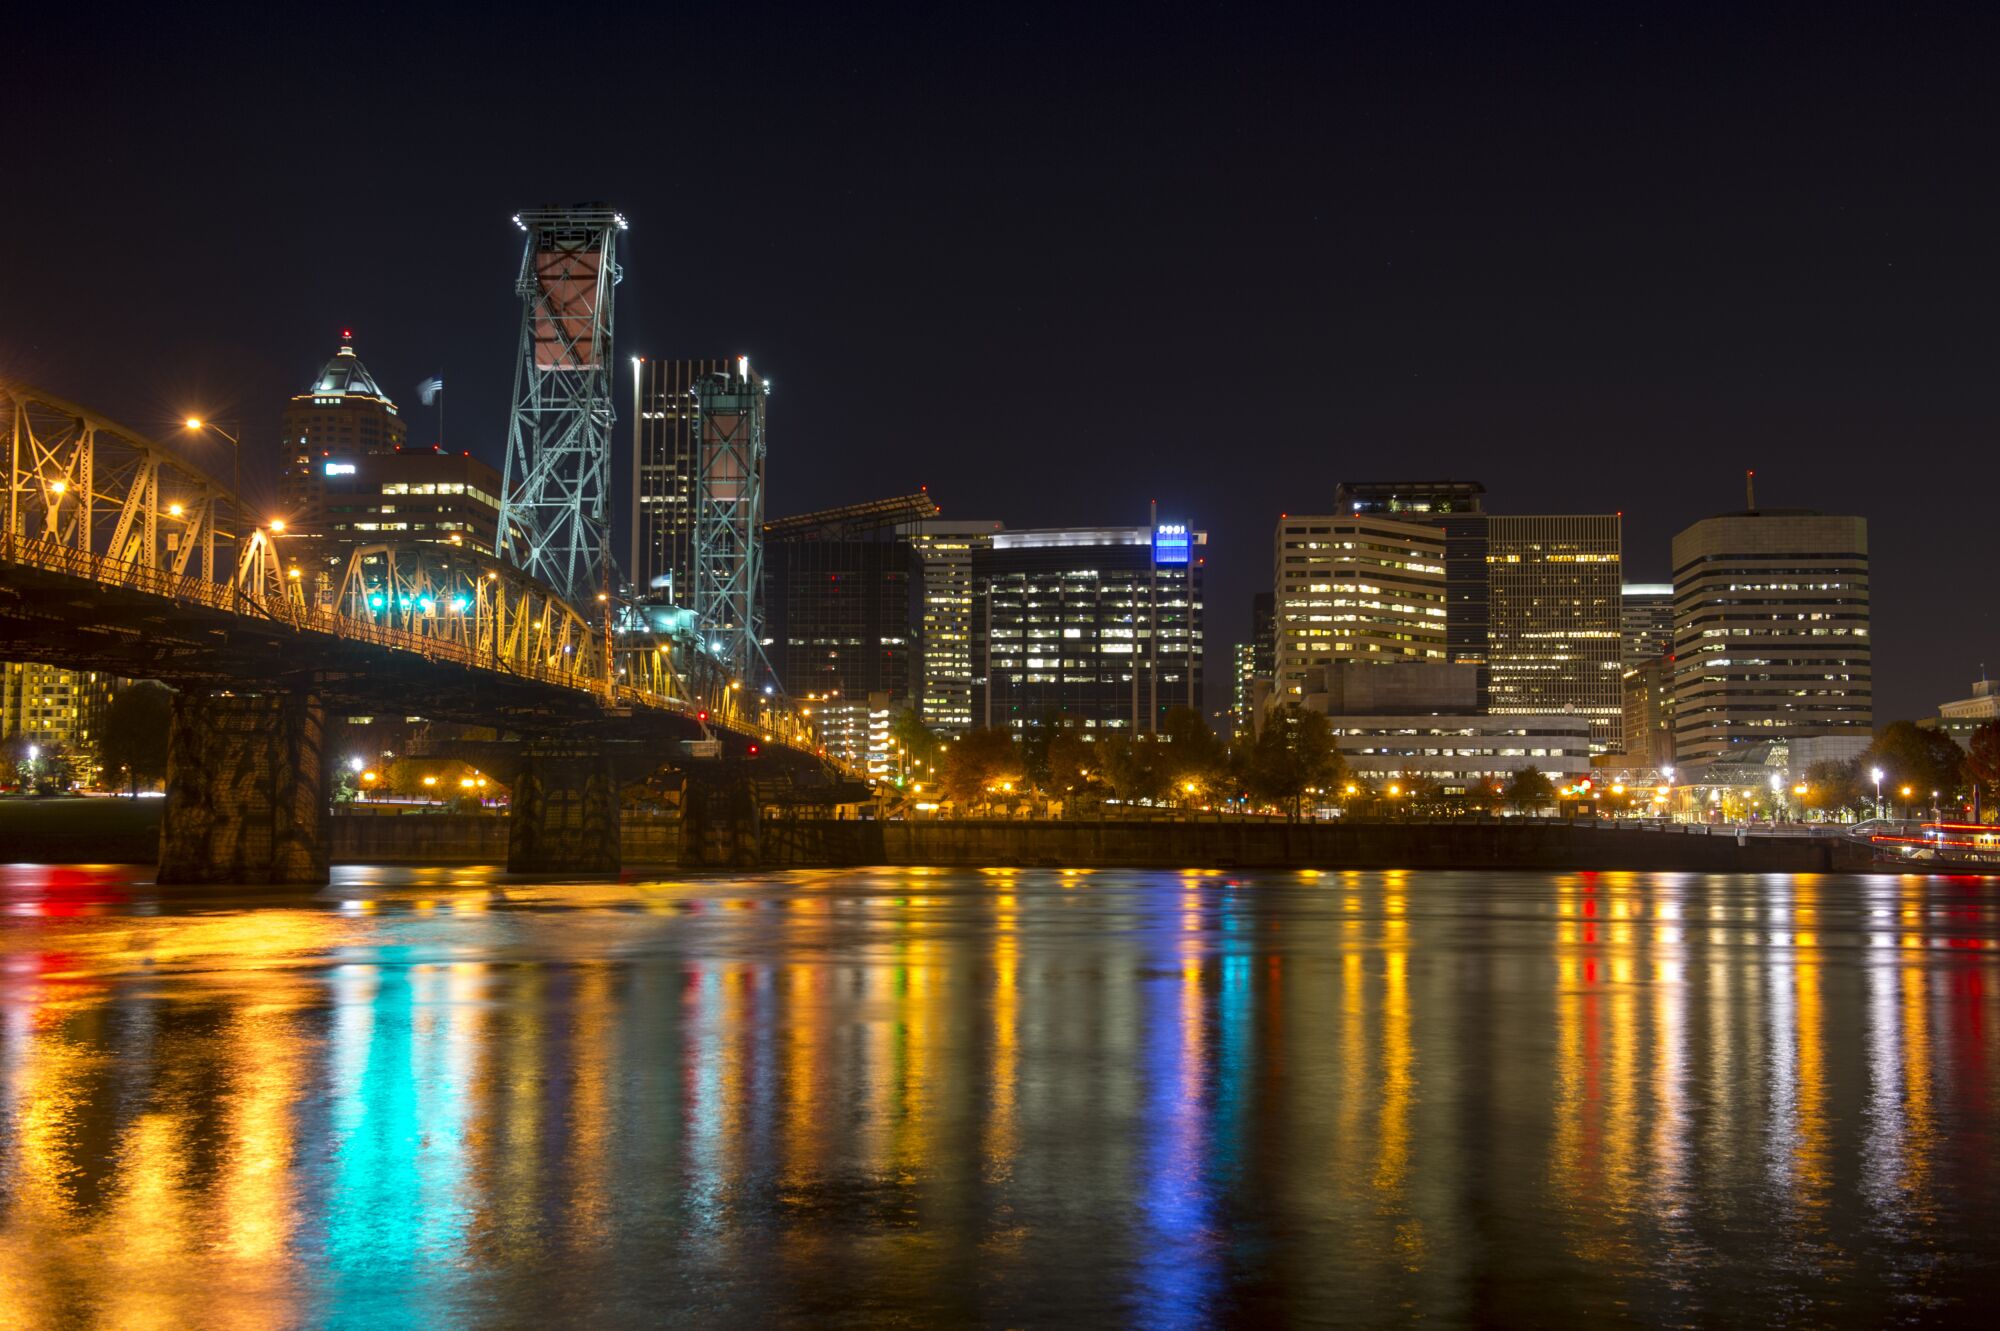 The lights of nan downtown Portland skyline, seen astatine nighttime adjacent to nan Hawthorne Bridge, reflected by nan Willamette River